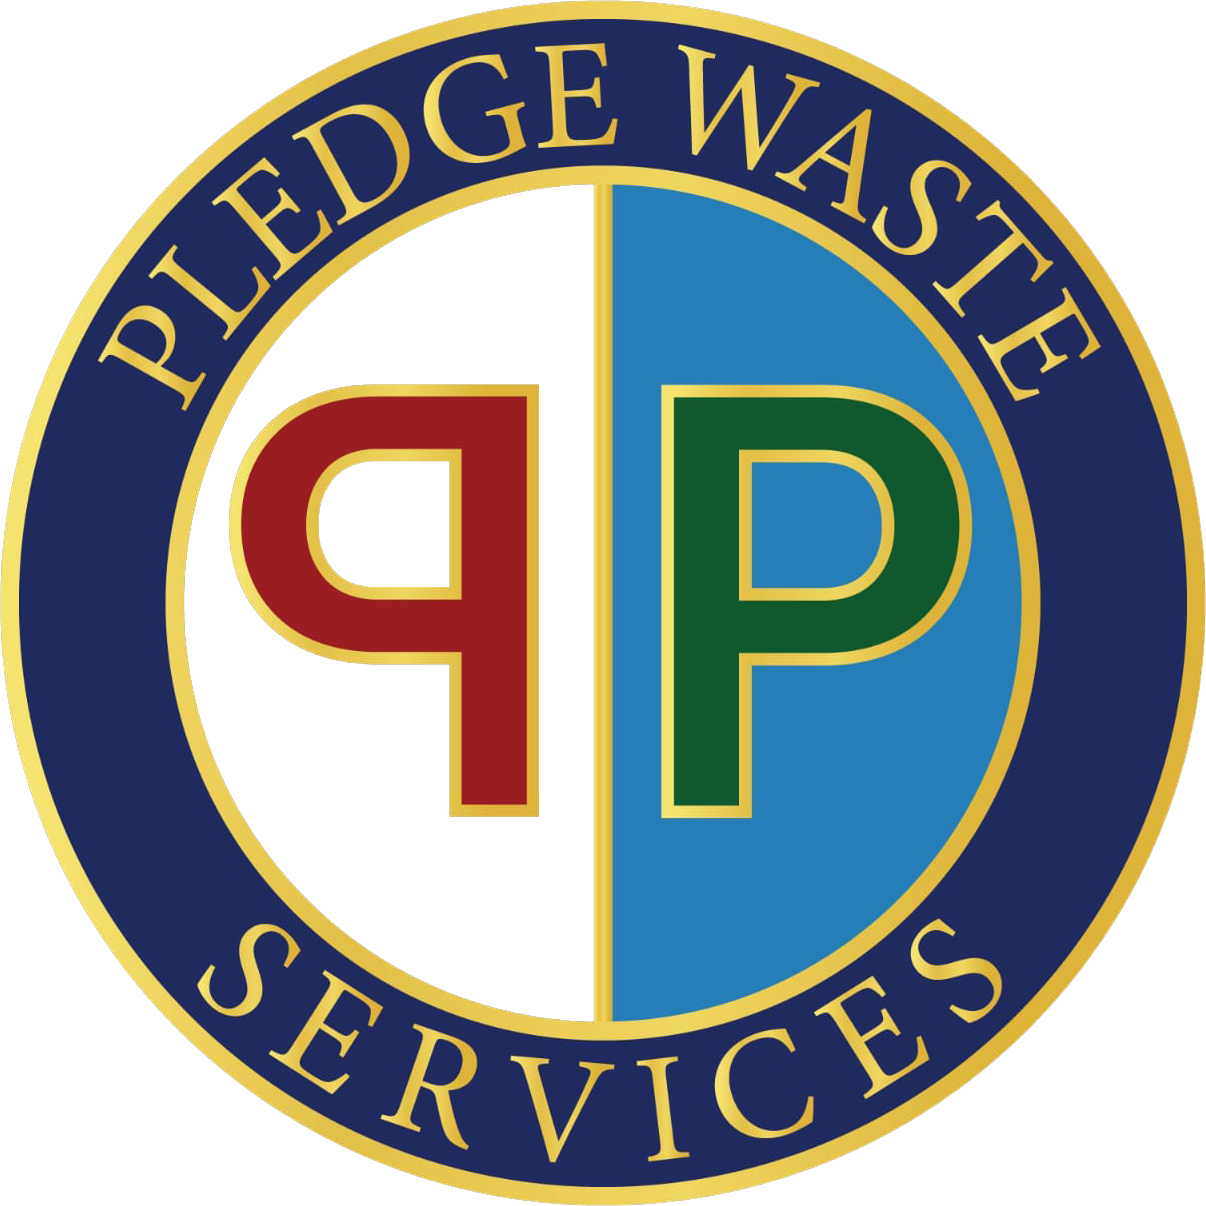 Pledge Waste Services